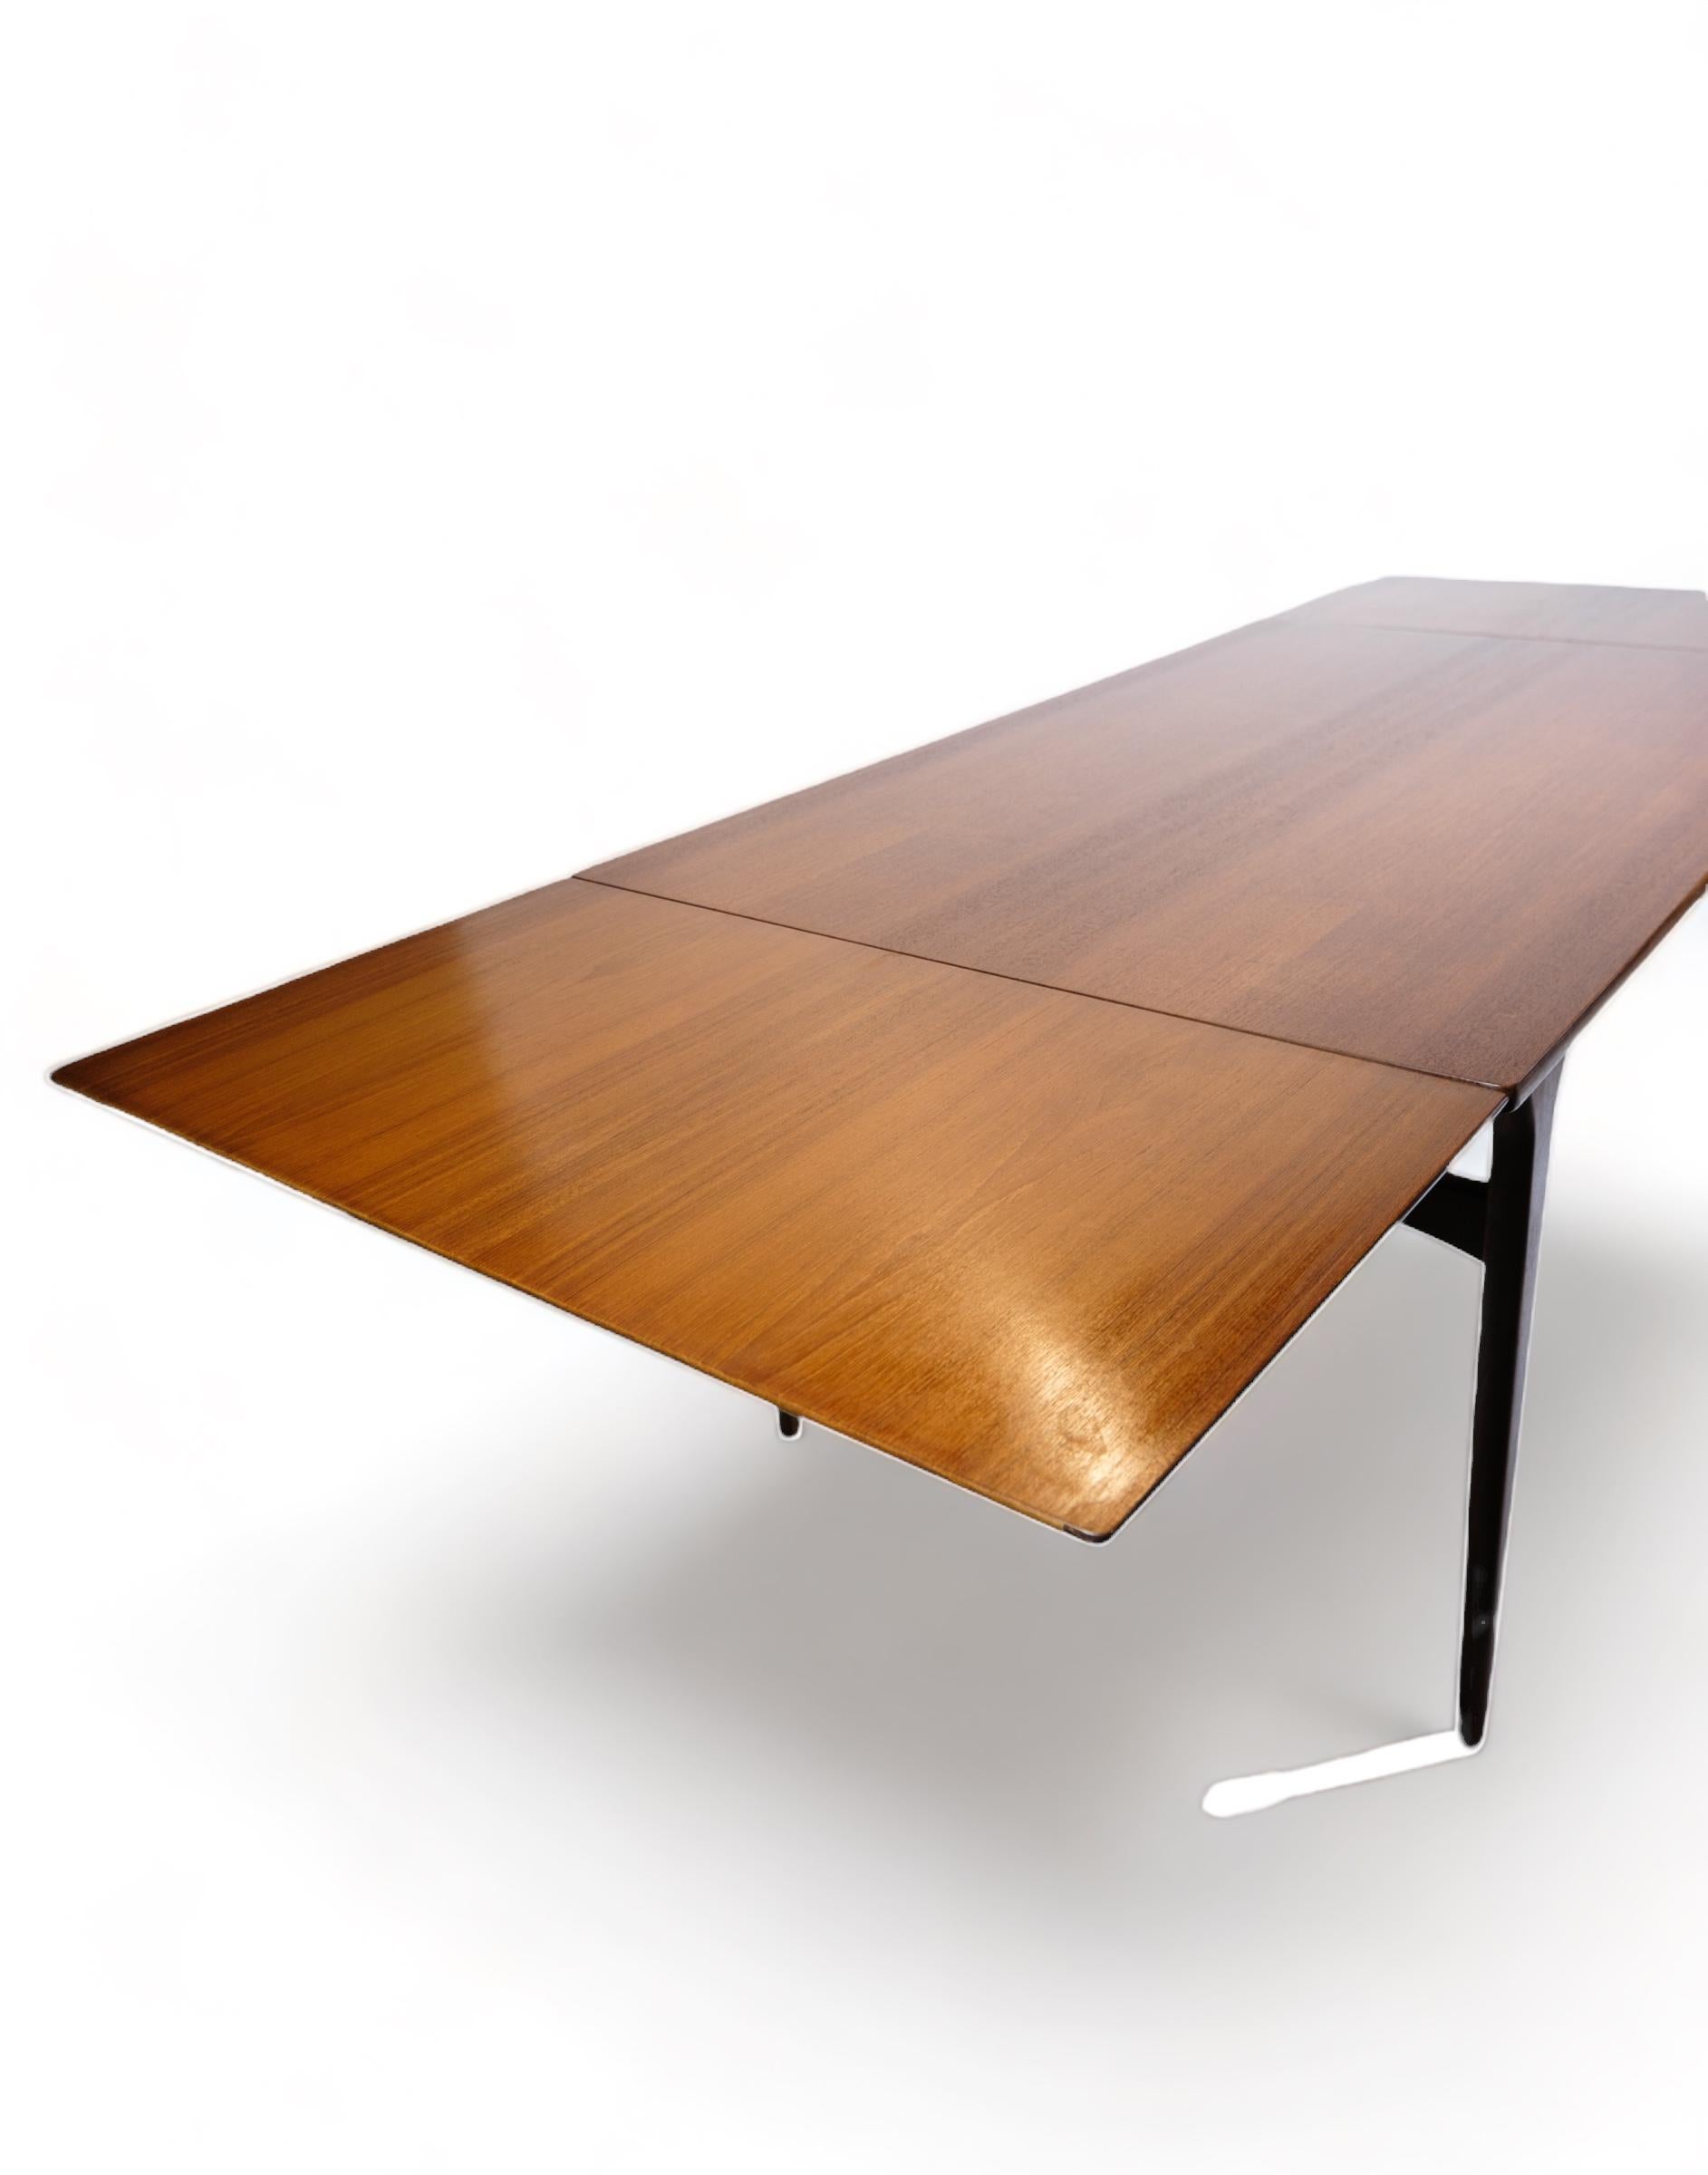 Vejle Møbelfabrik's 1960s Danish Design Dining Table with Dutch Extension For Sale 2